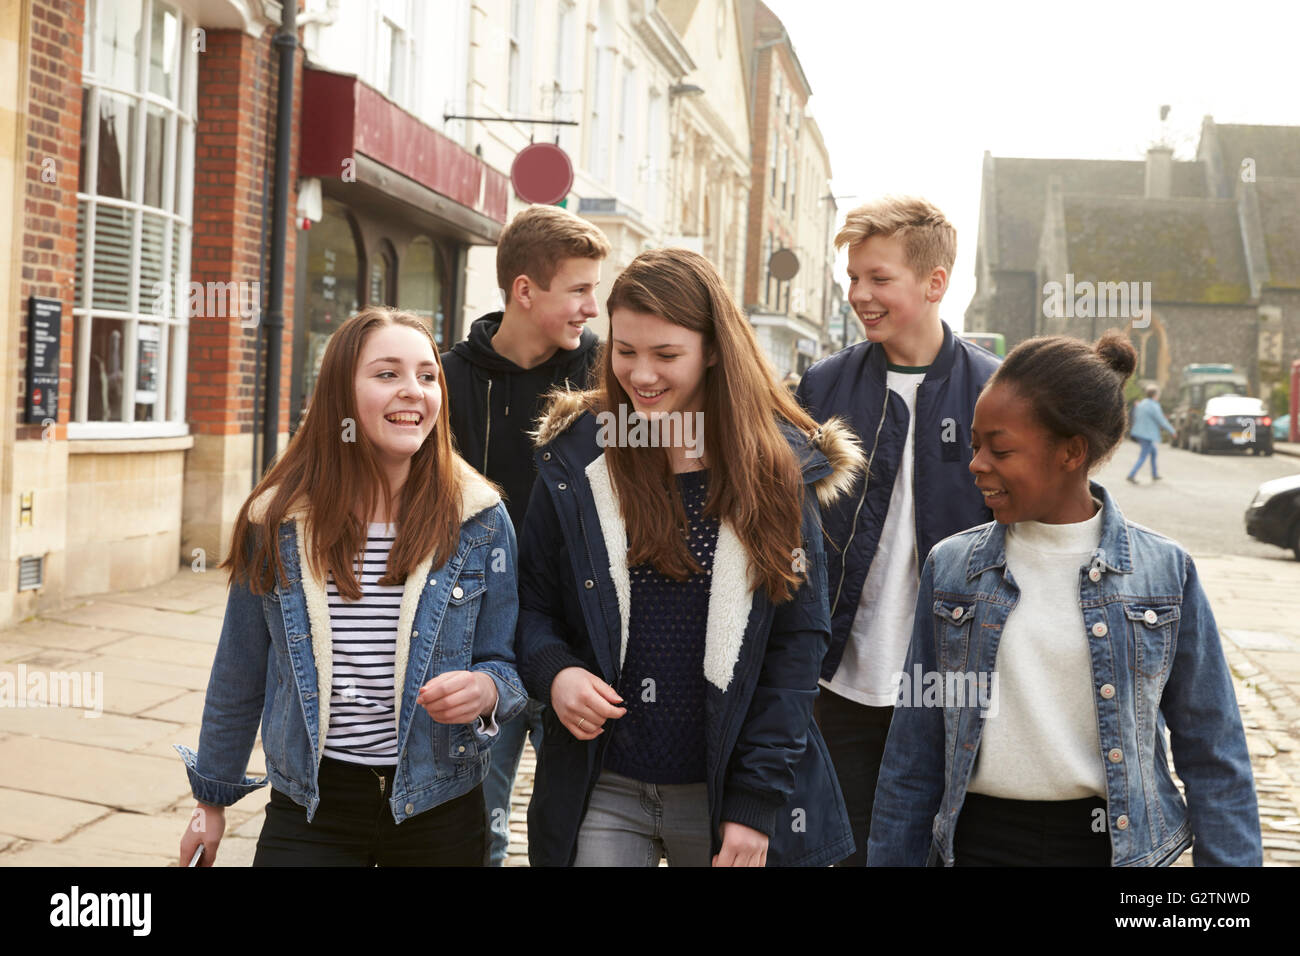 Group Of Teenagers Walking Along Street In Urban Setting Stock Photo